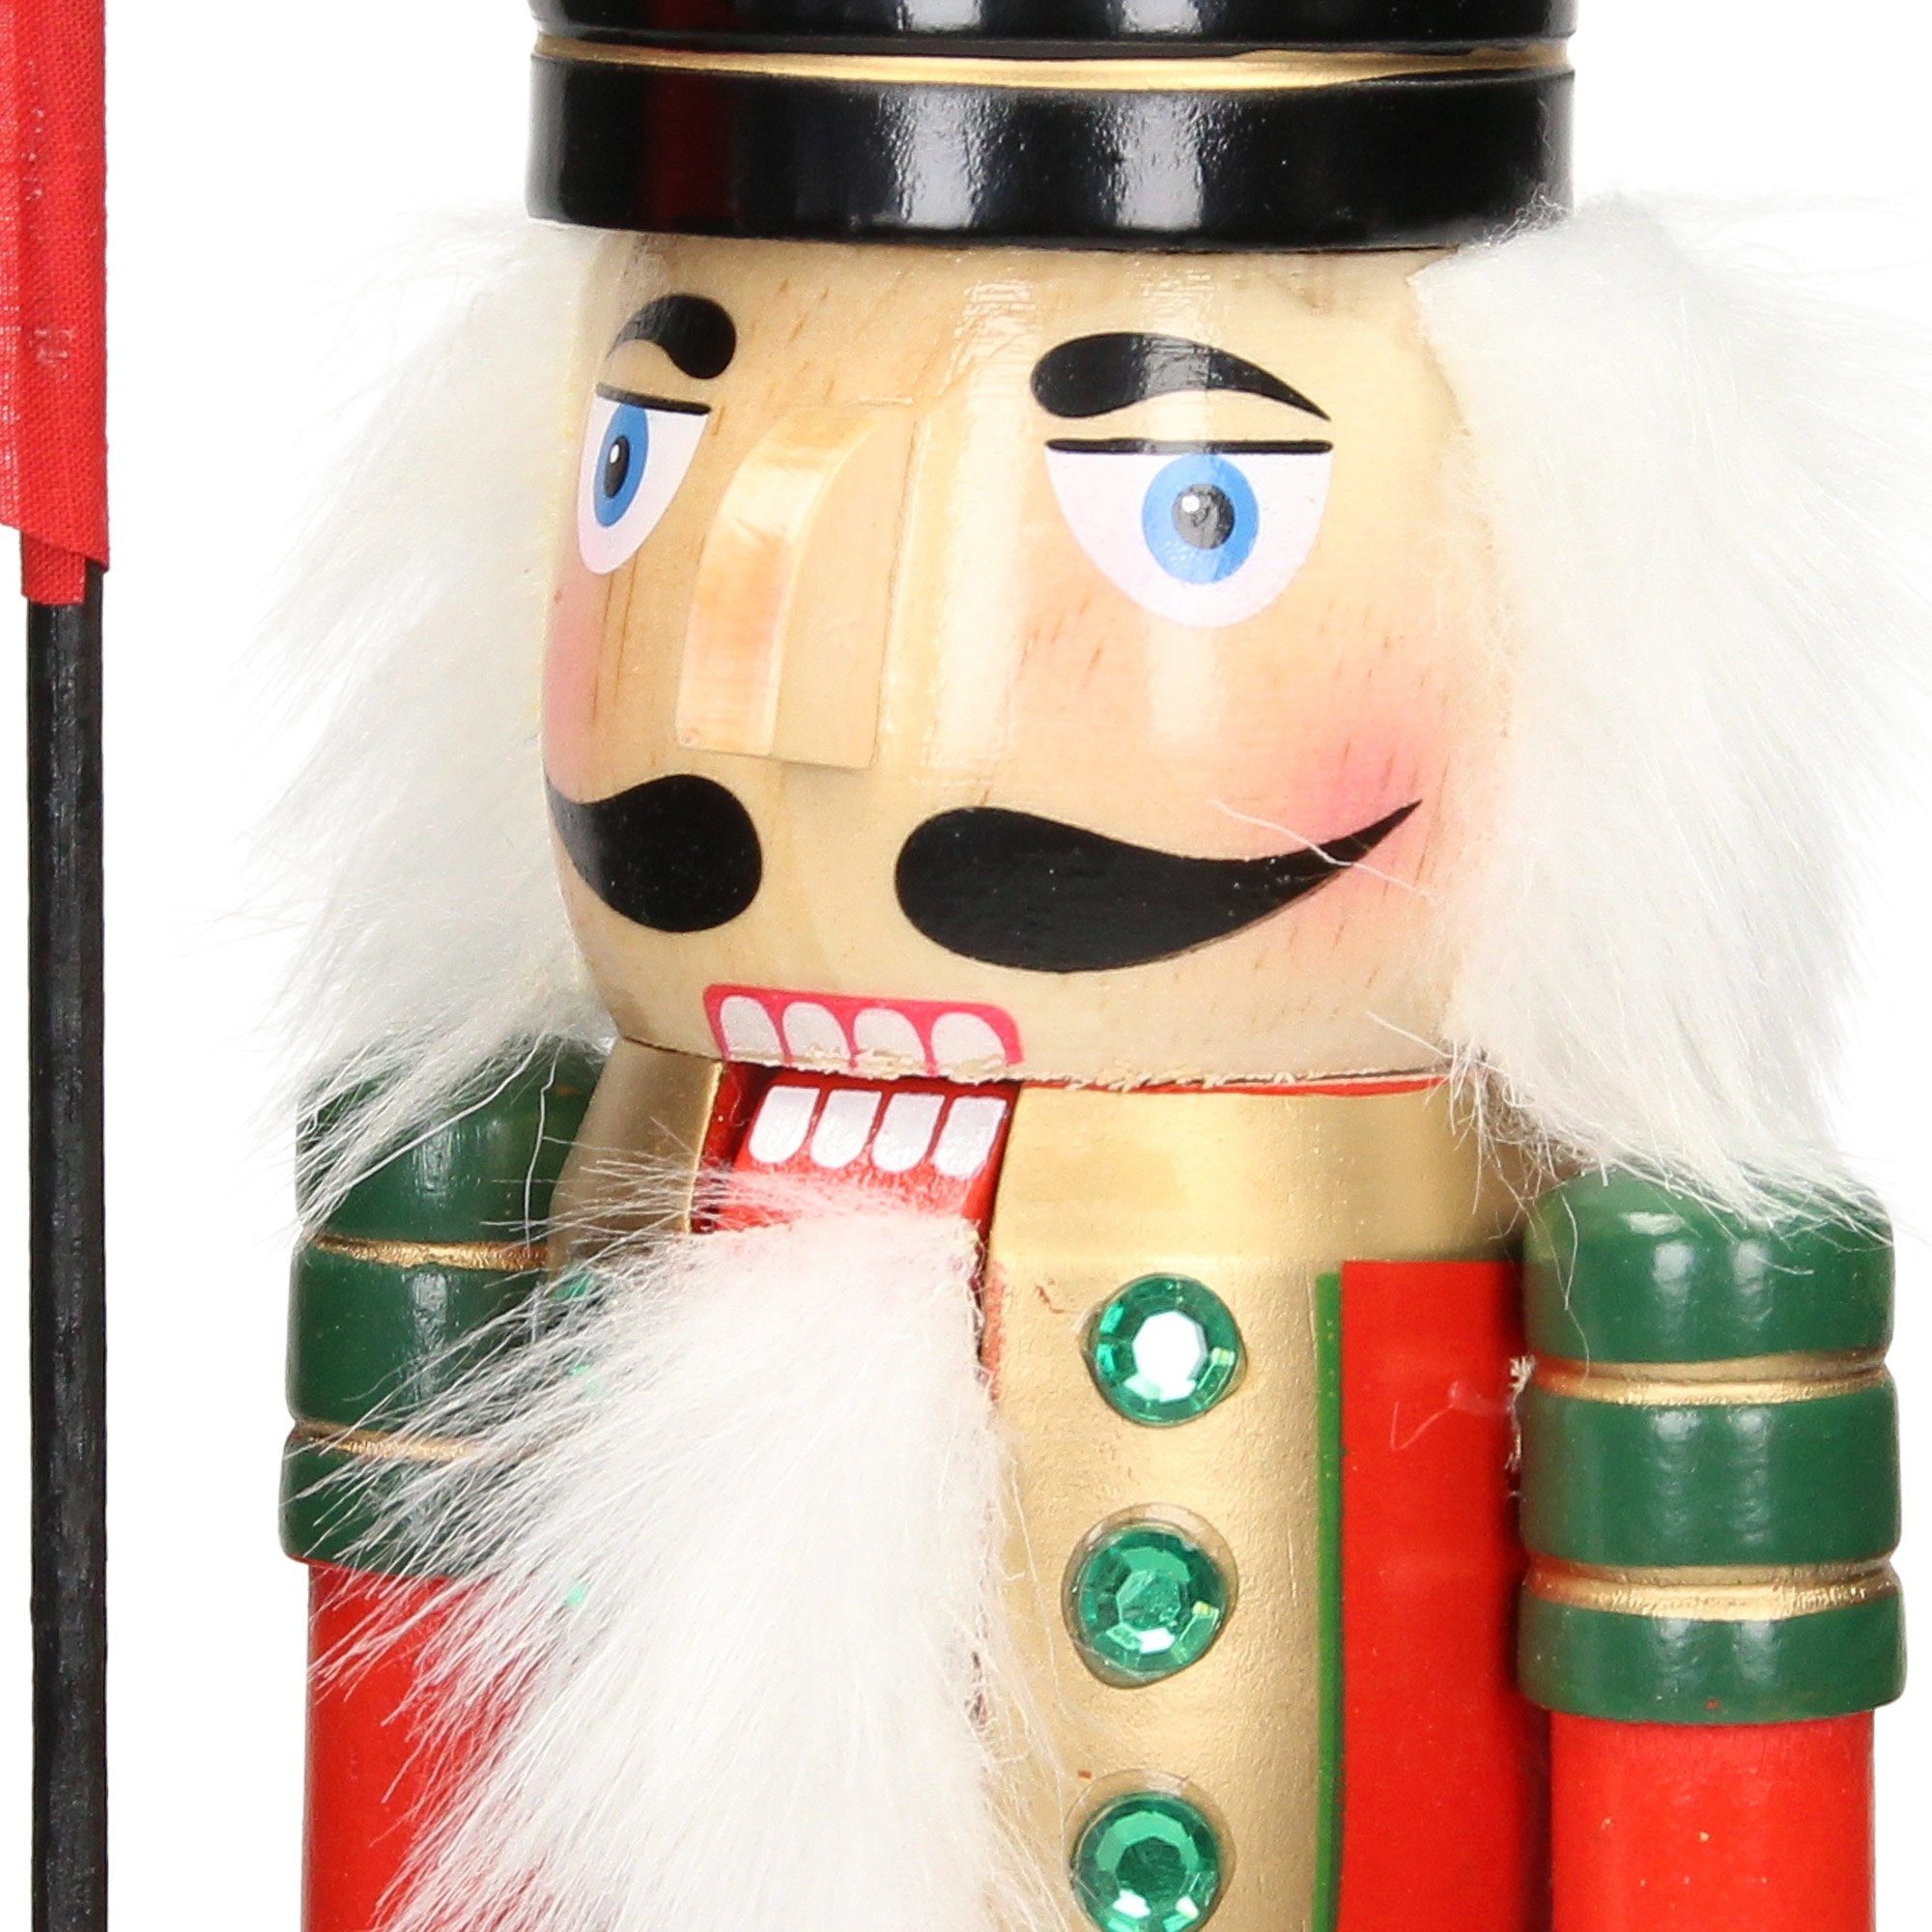 Nussknacker schwarzer Weihnachten Marionette, Nussknacker Soldat Hut ECD Unikat Holz Figur König Germany Holzfigur Puppet Fahne handbemalt 38cm